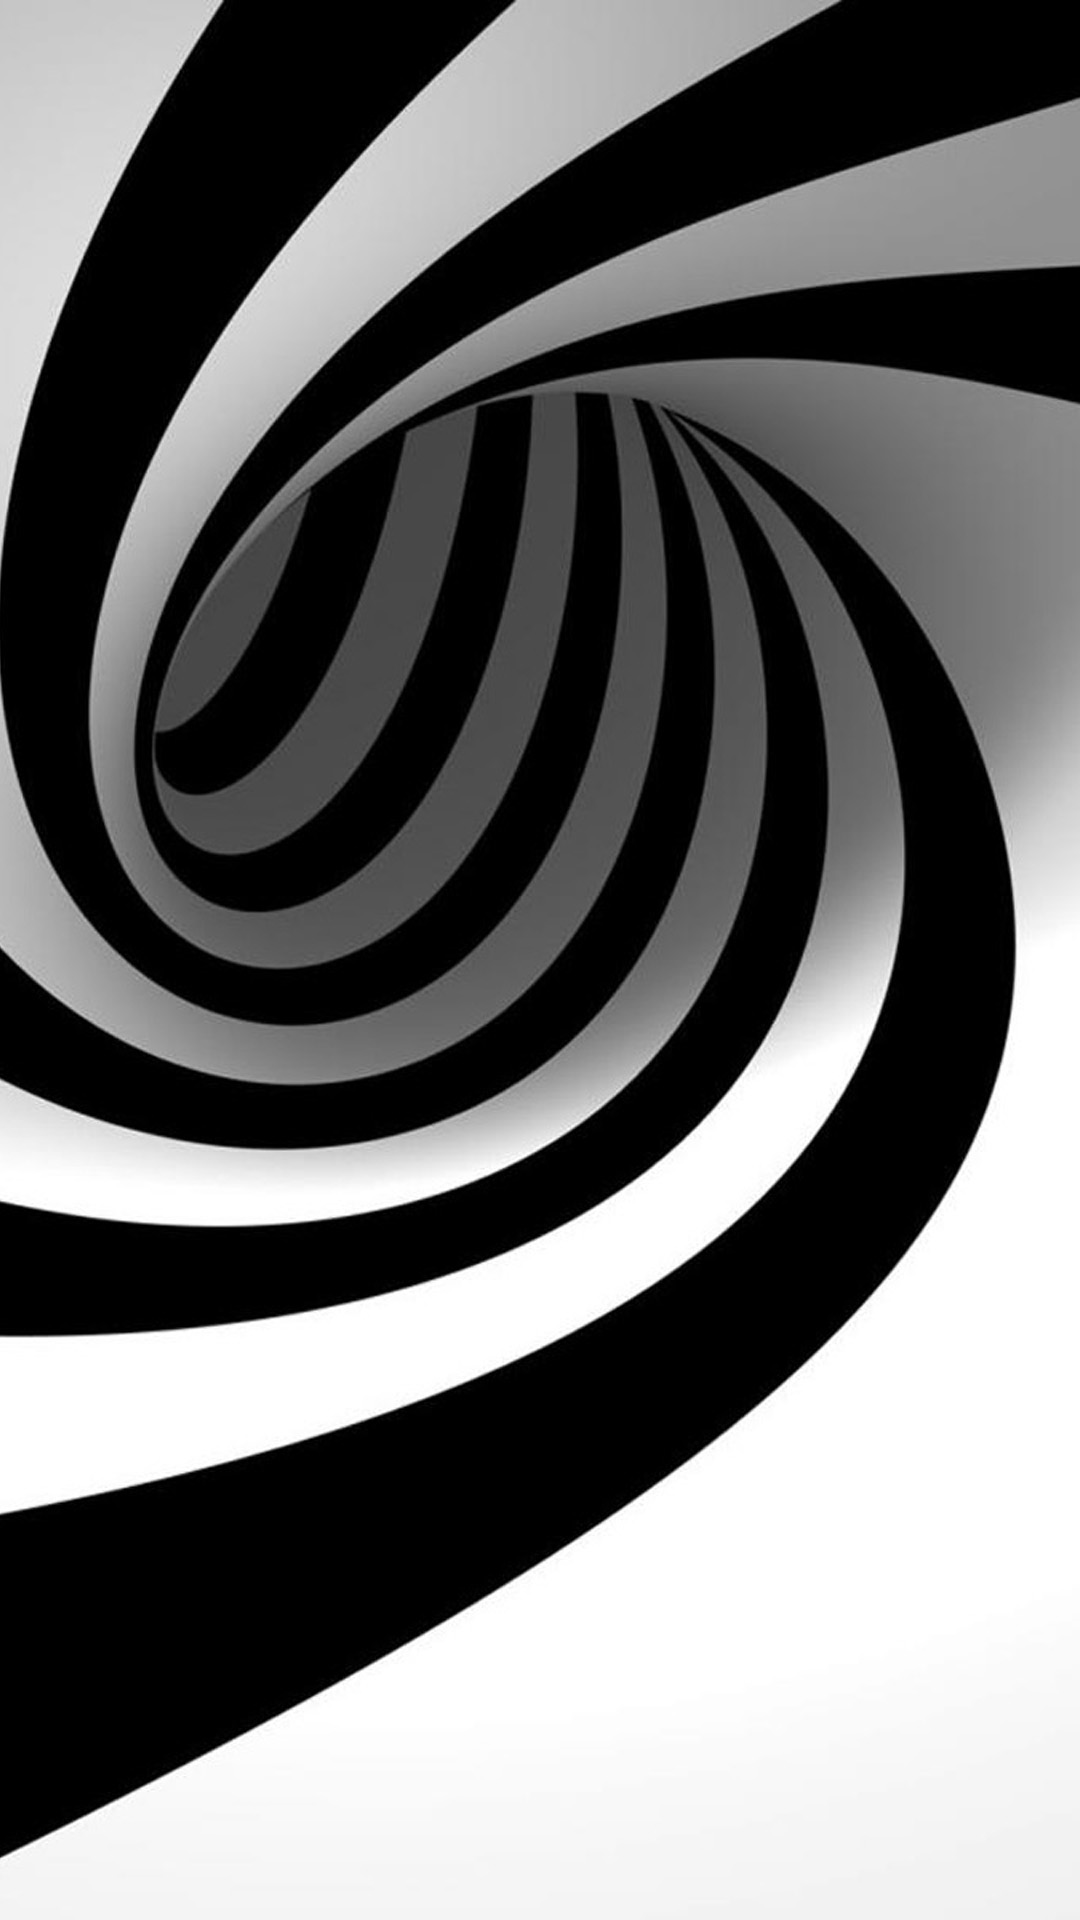 Black And White Swirl iPhone Wallpaper